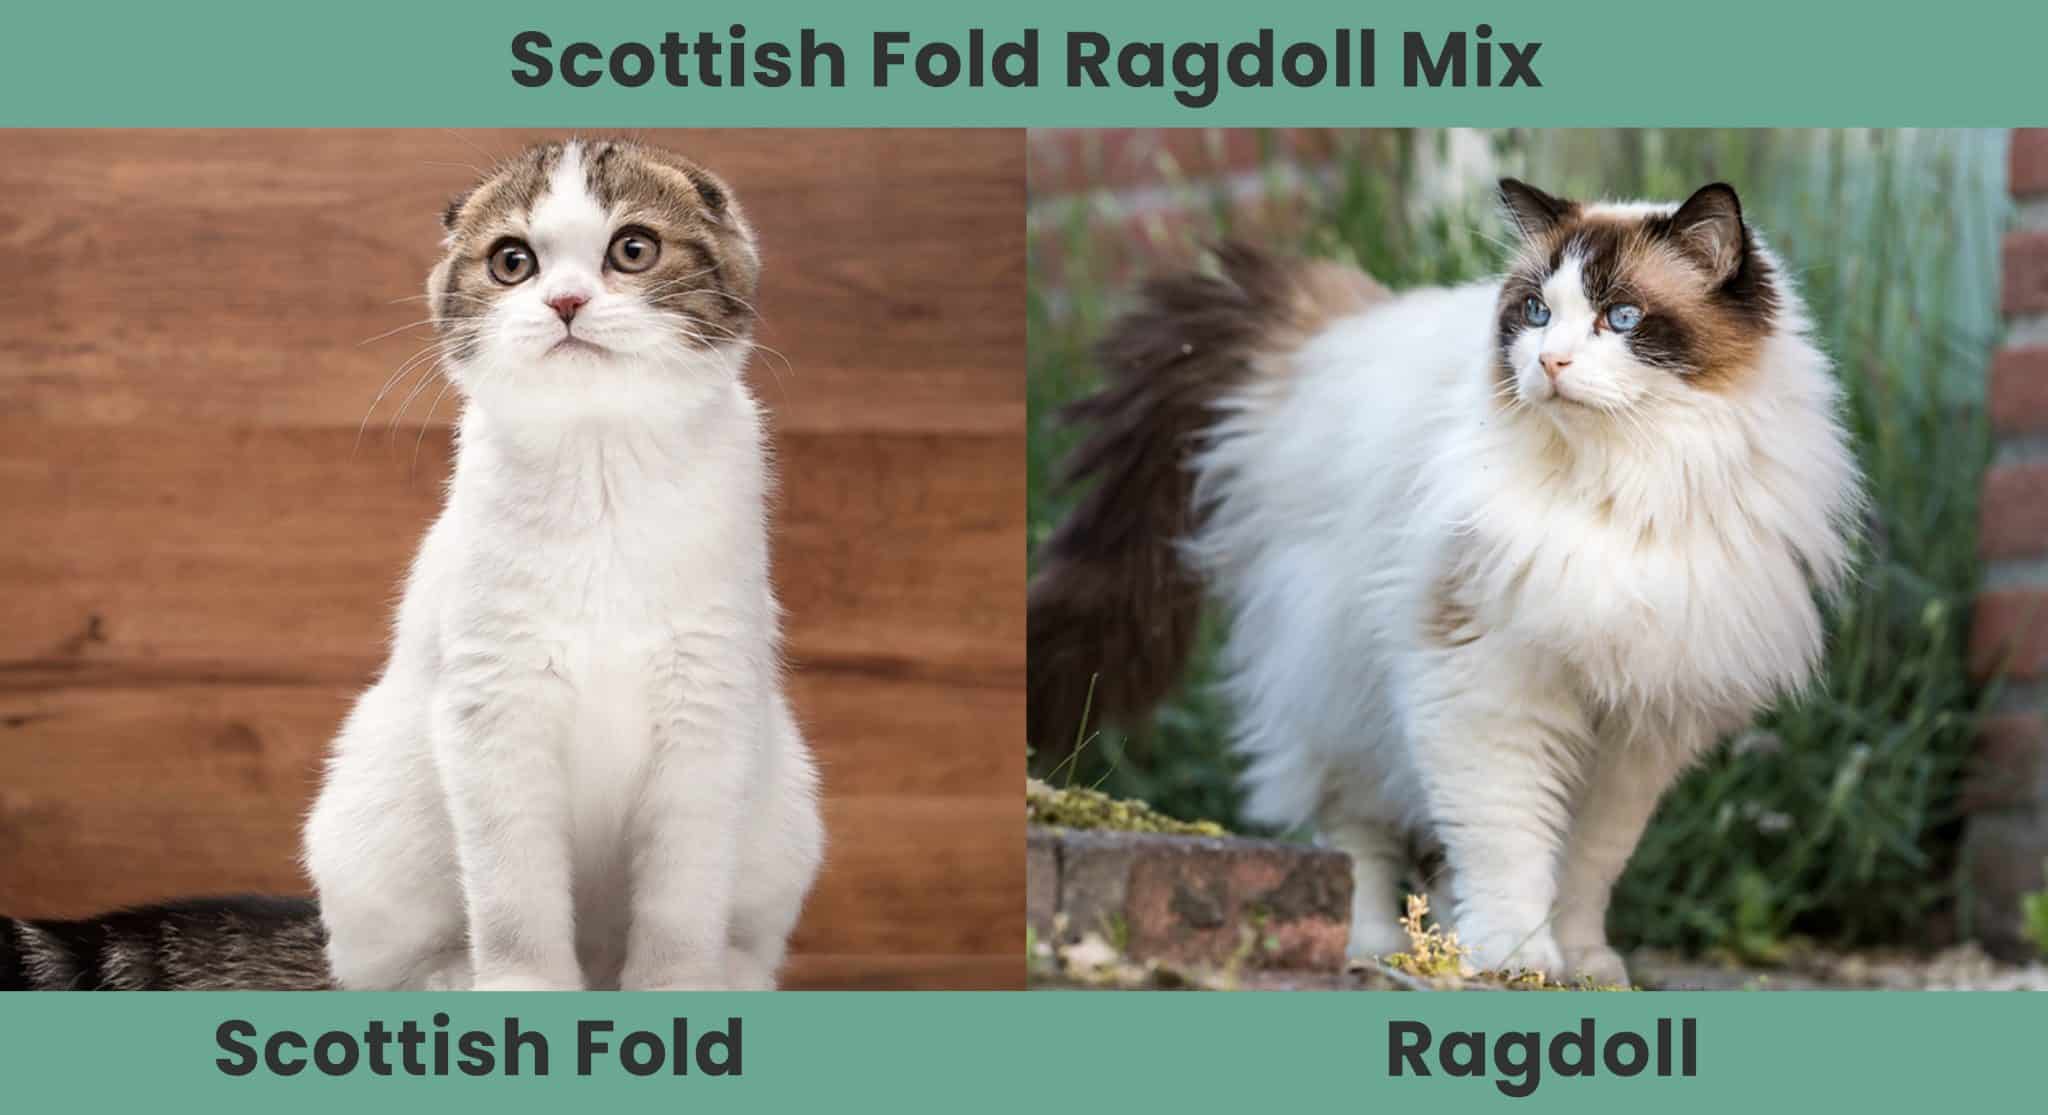 The Parent Breed of Scottish Fold Ragdoll Mix